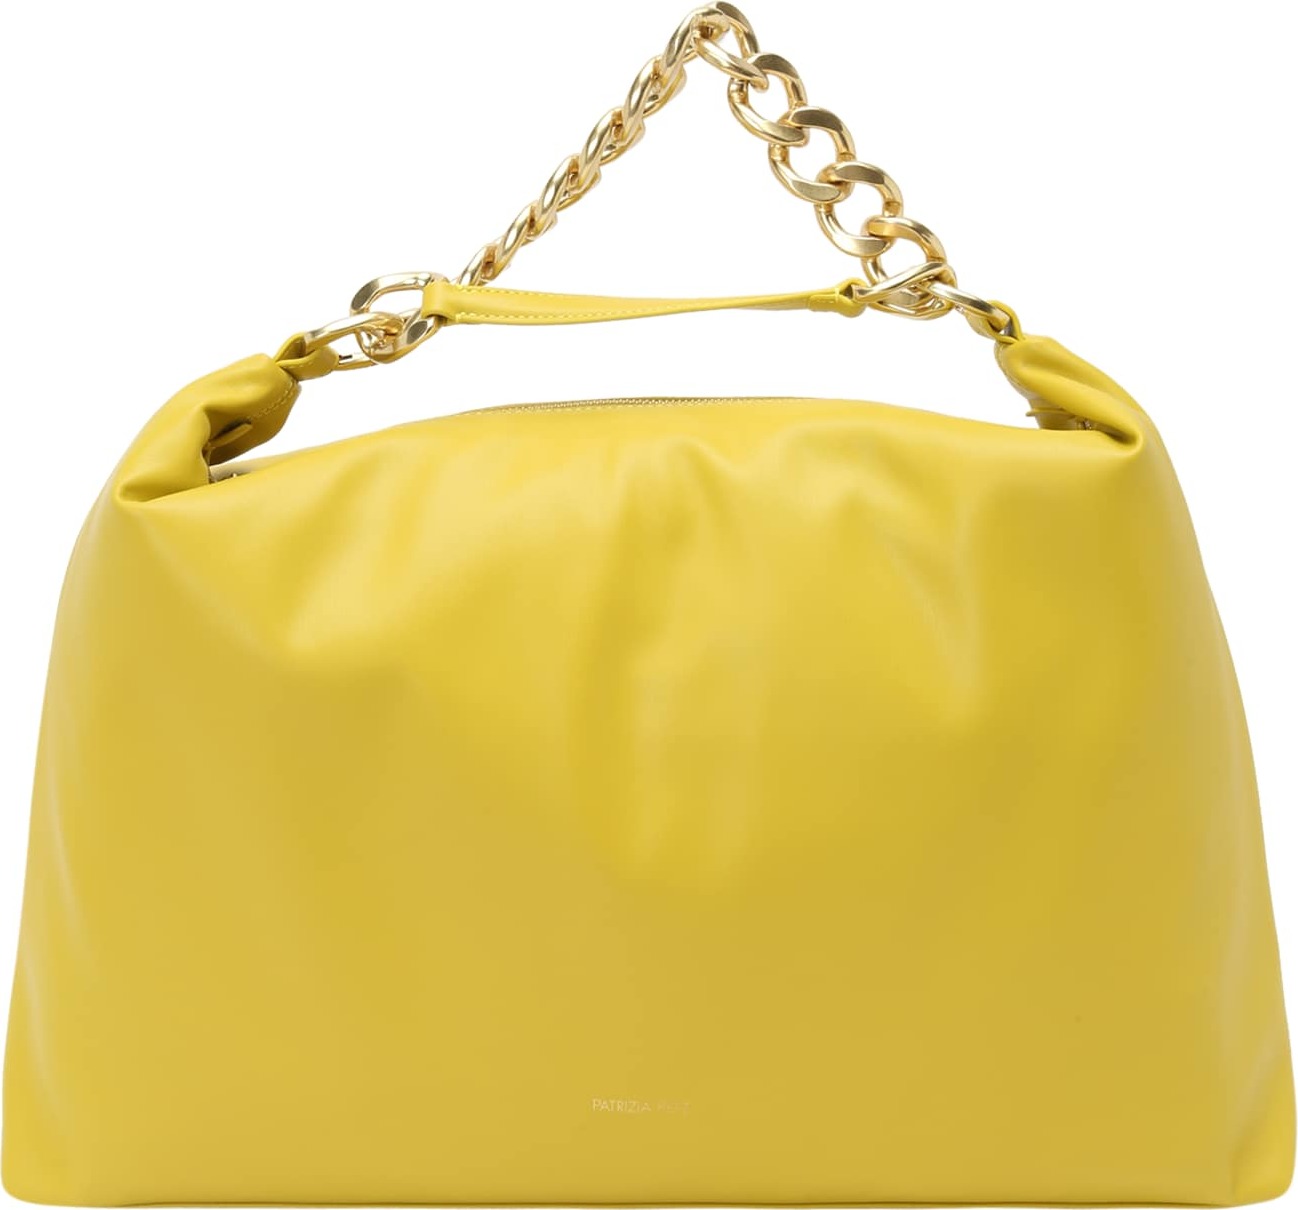 PATRIZIA PEPE Nákupní taška 'Borsa' žlutá